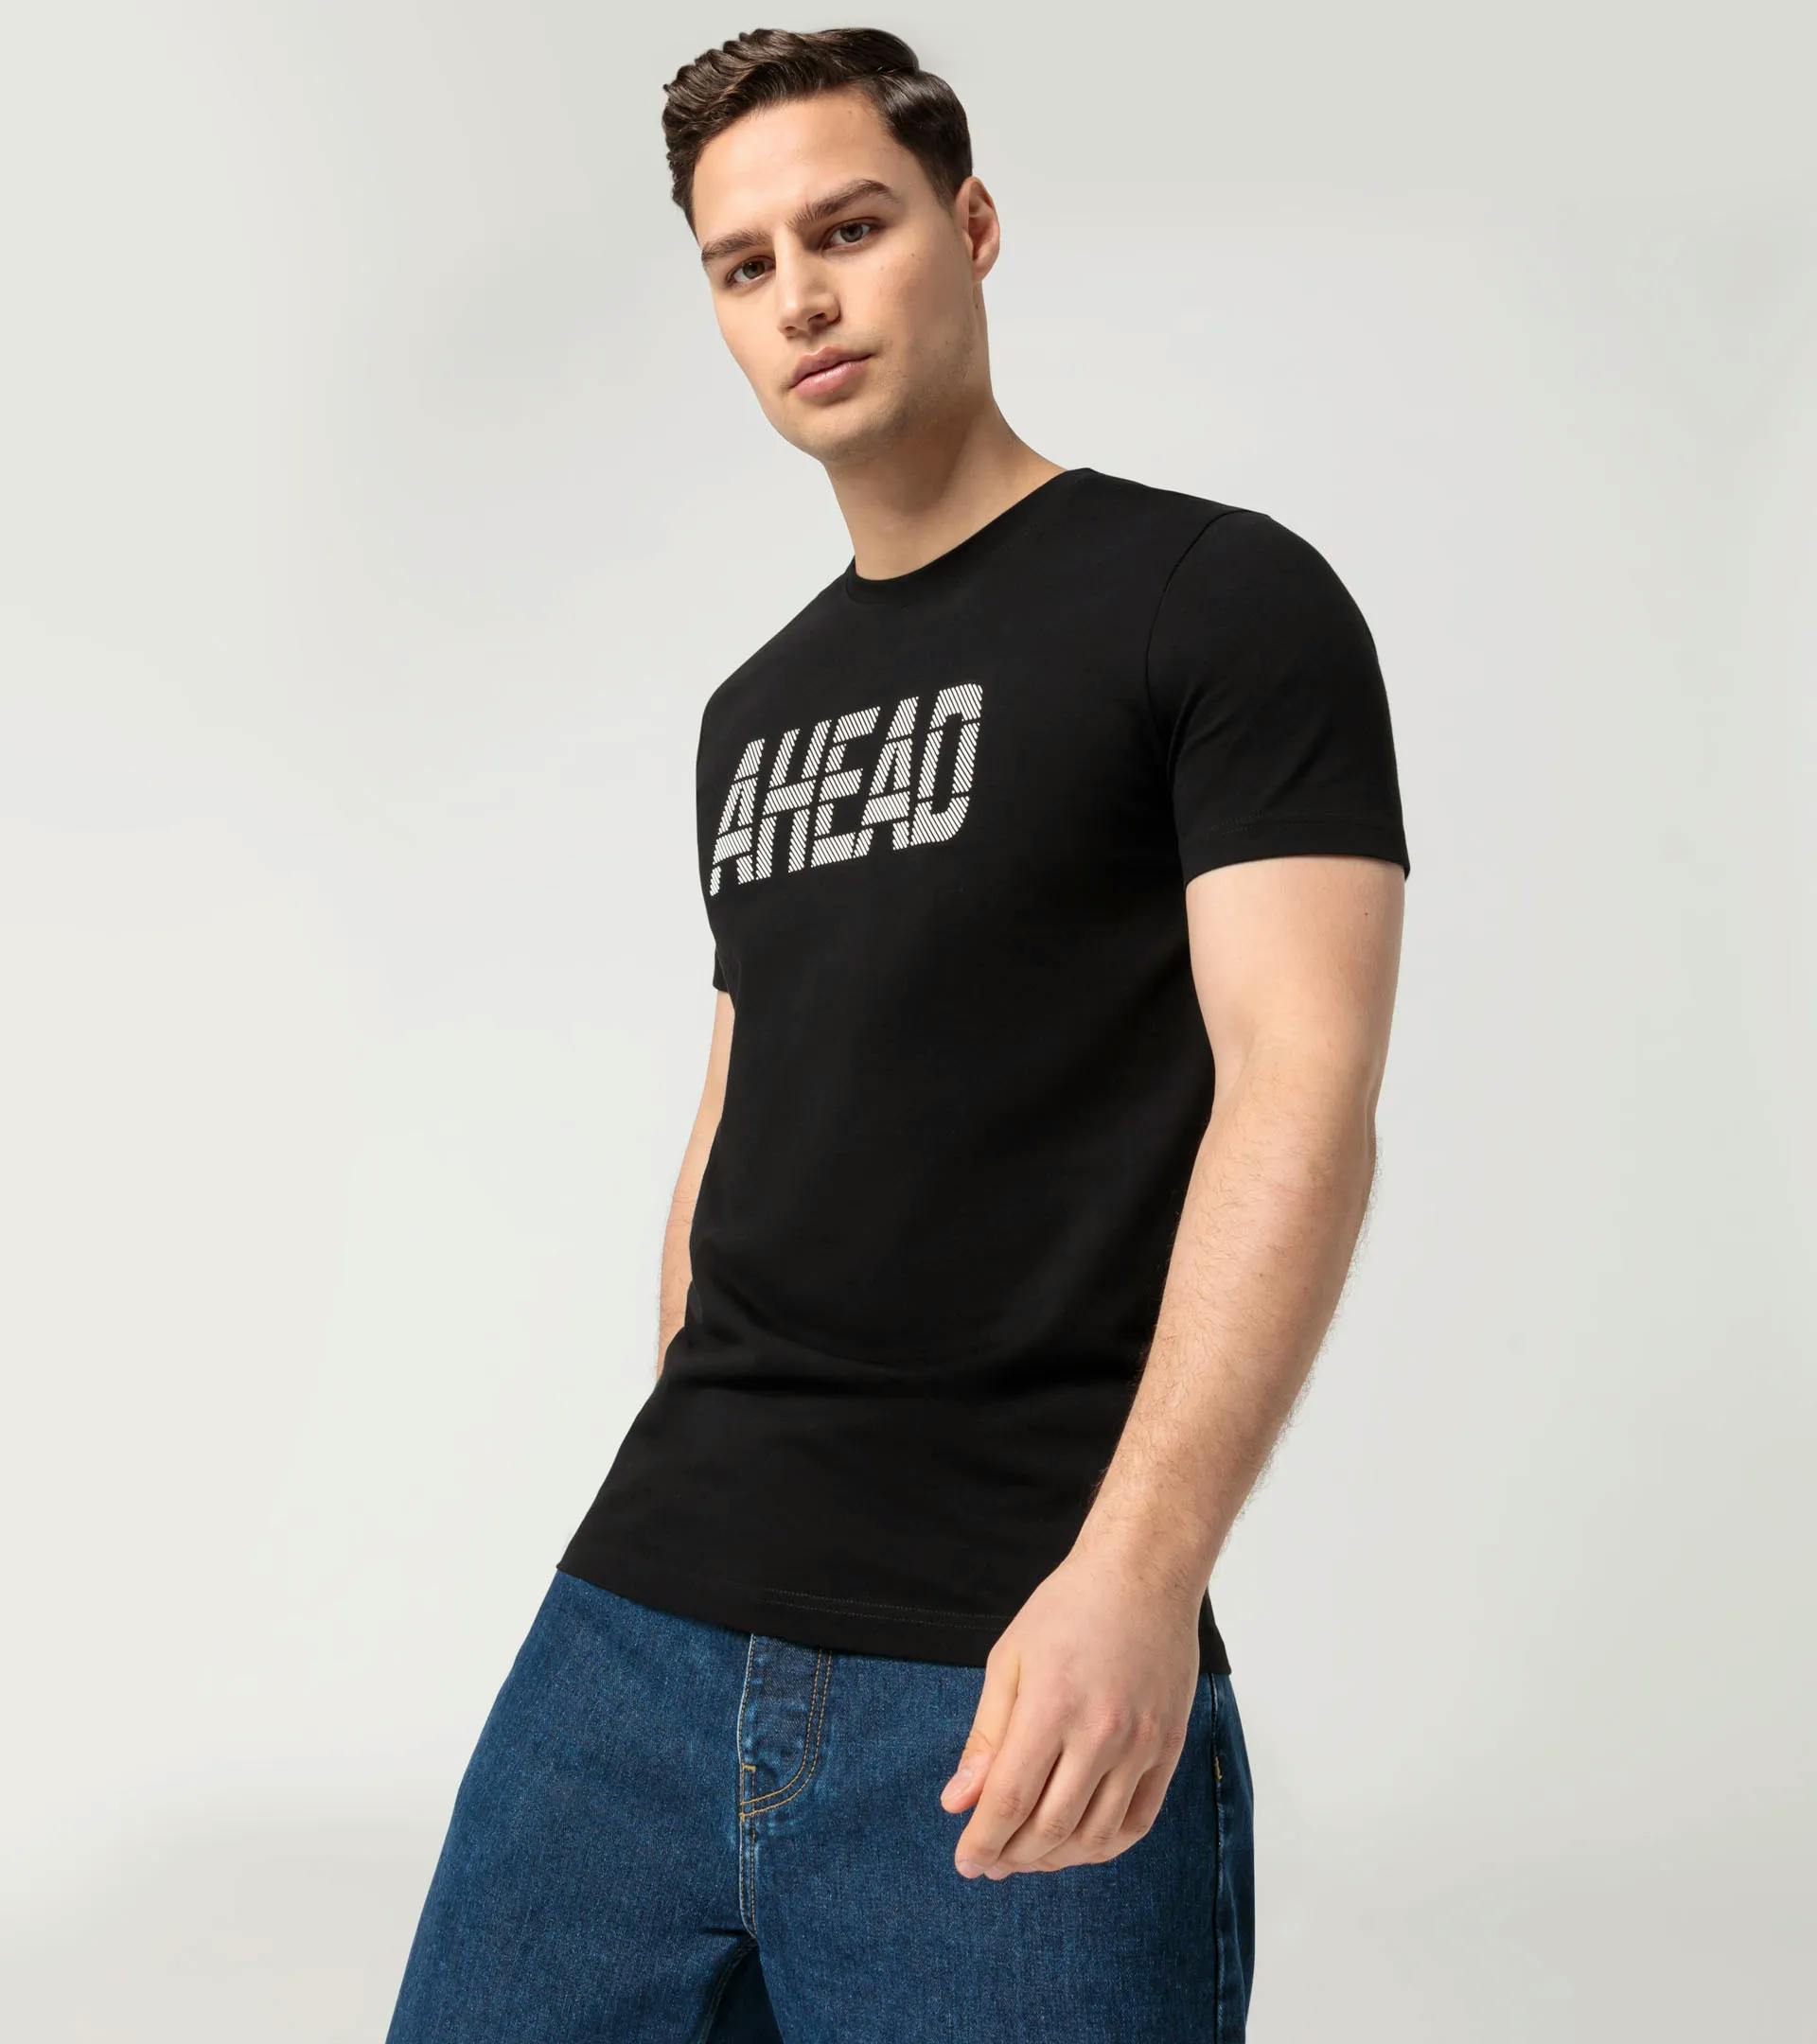 Camiseta unisex AHEAD 4